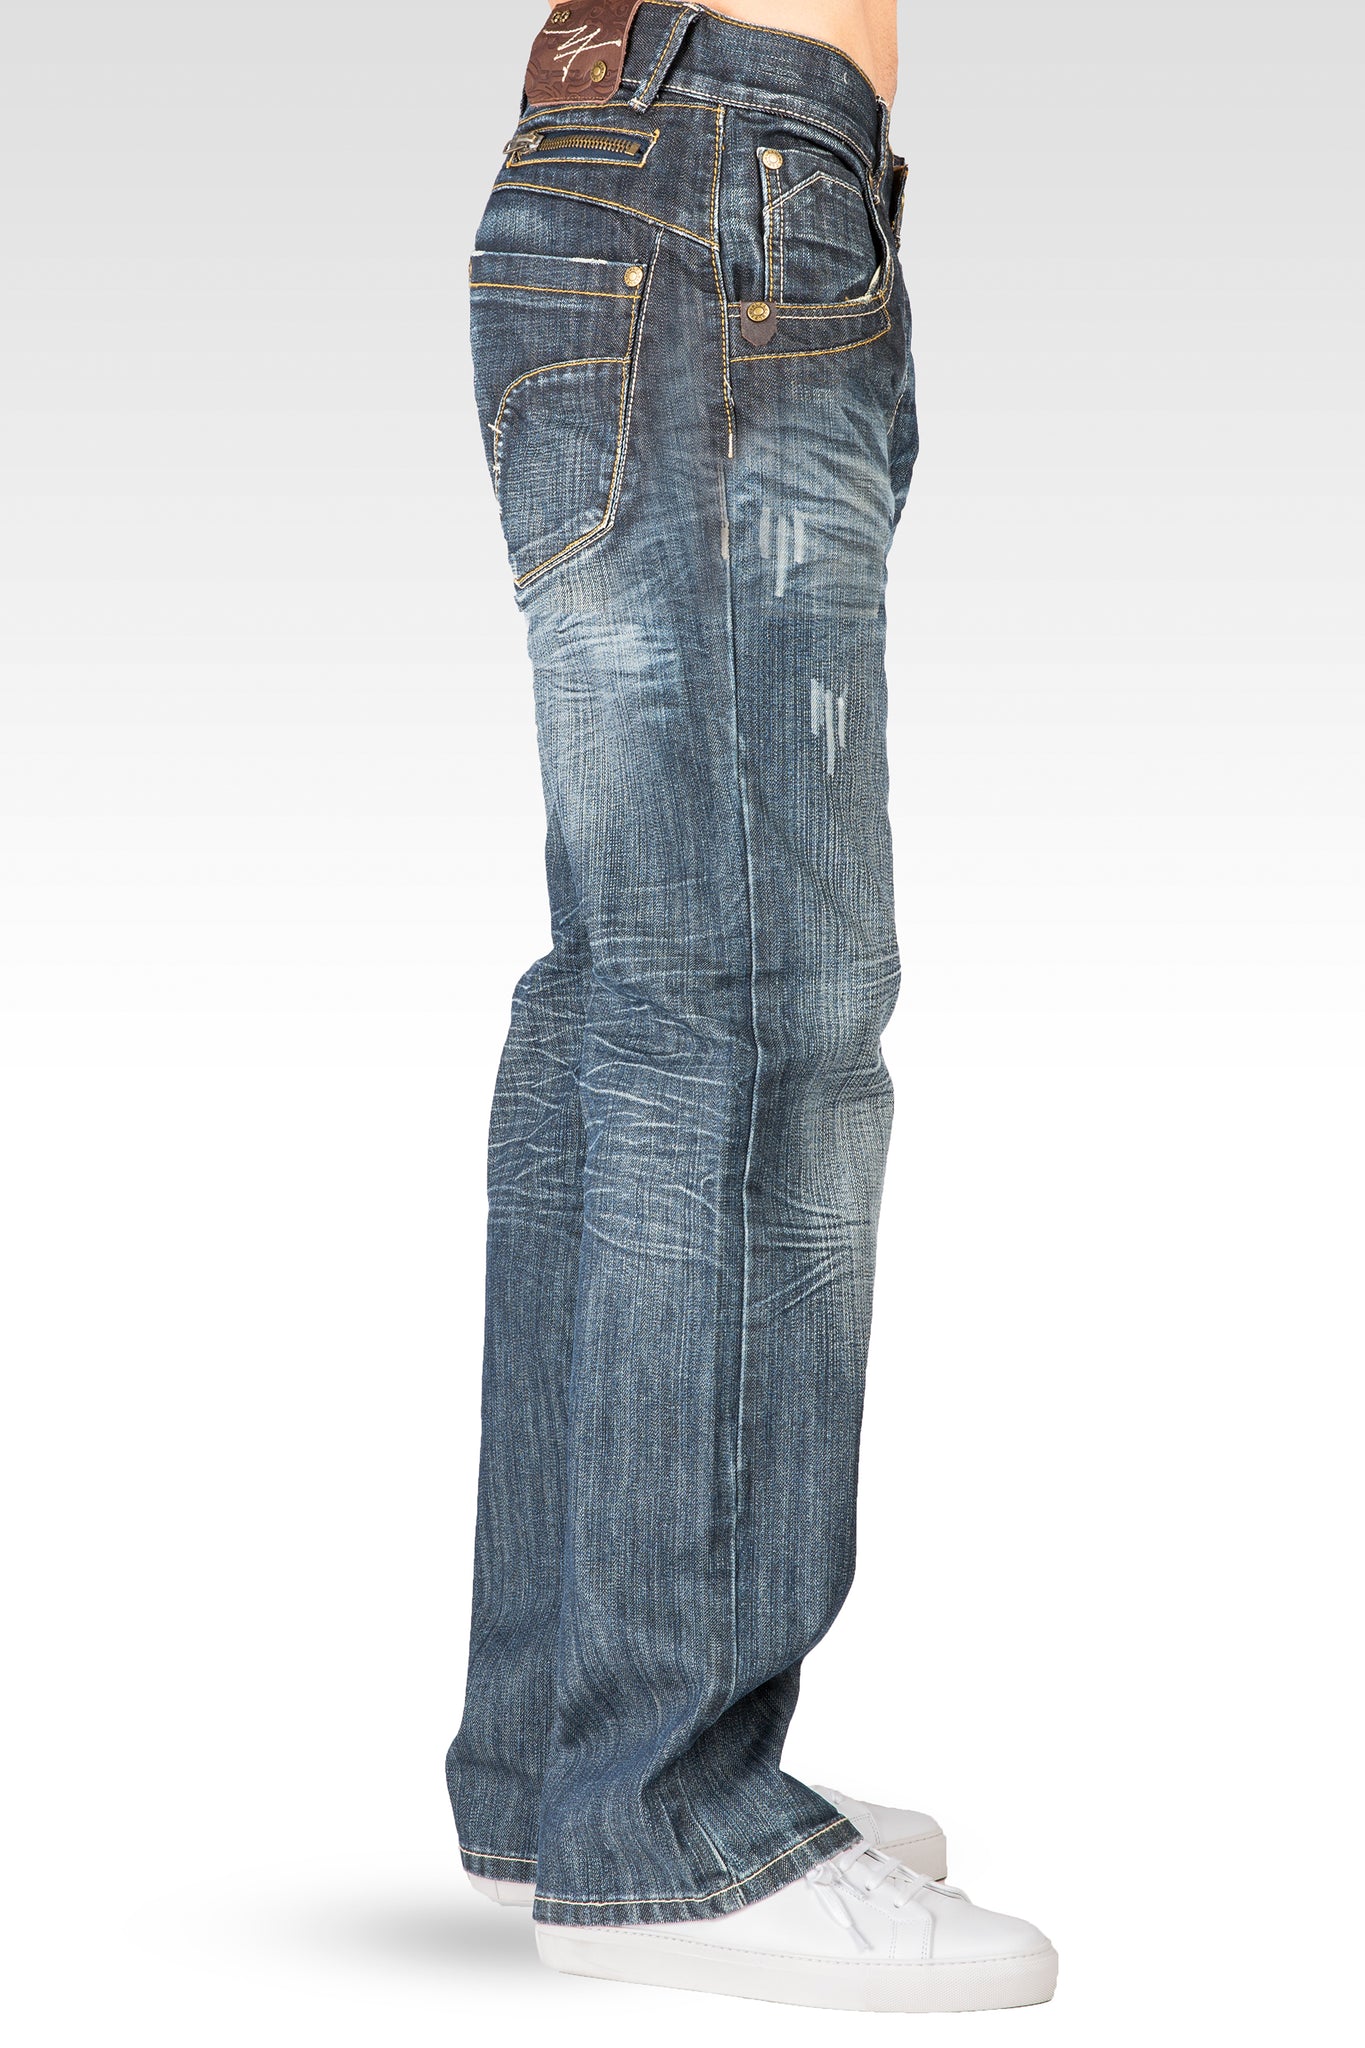 Men's Relaxed Bootcut Premium Denim Medium Blue Distressed Jean Zipper Utility Pocket